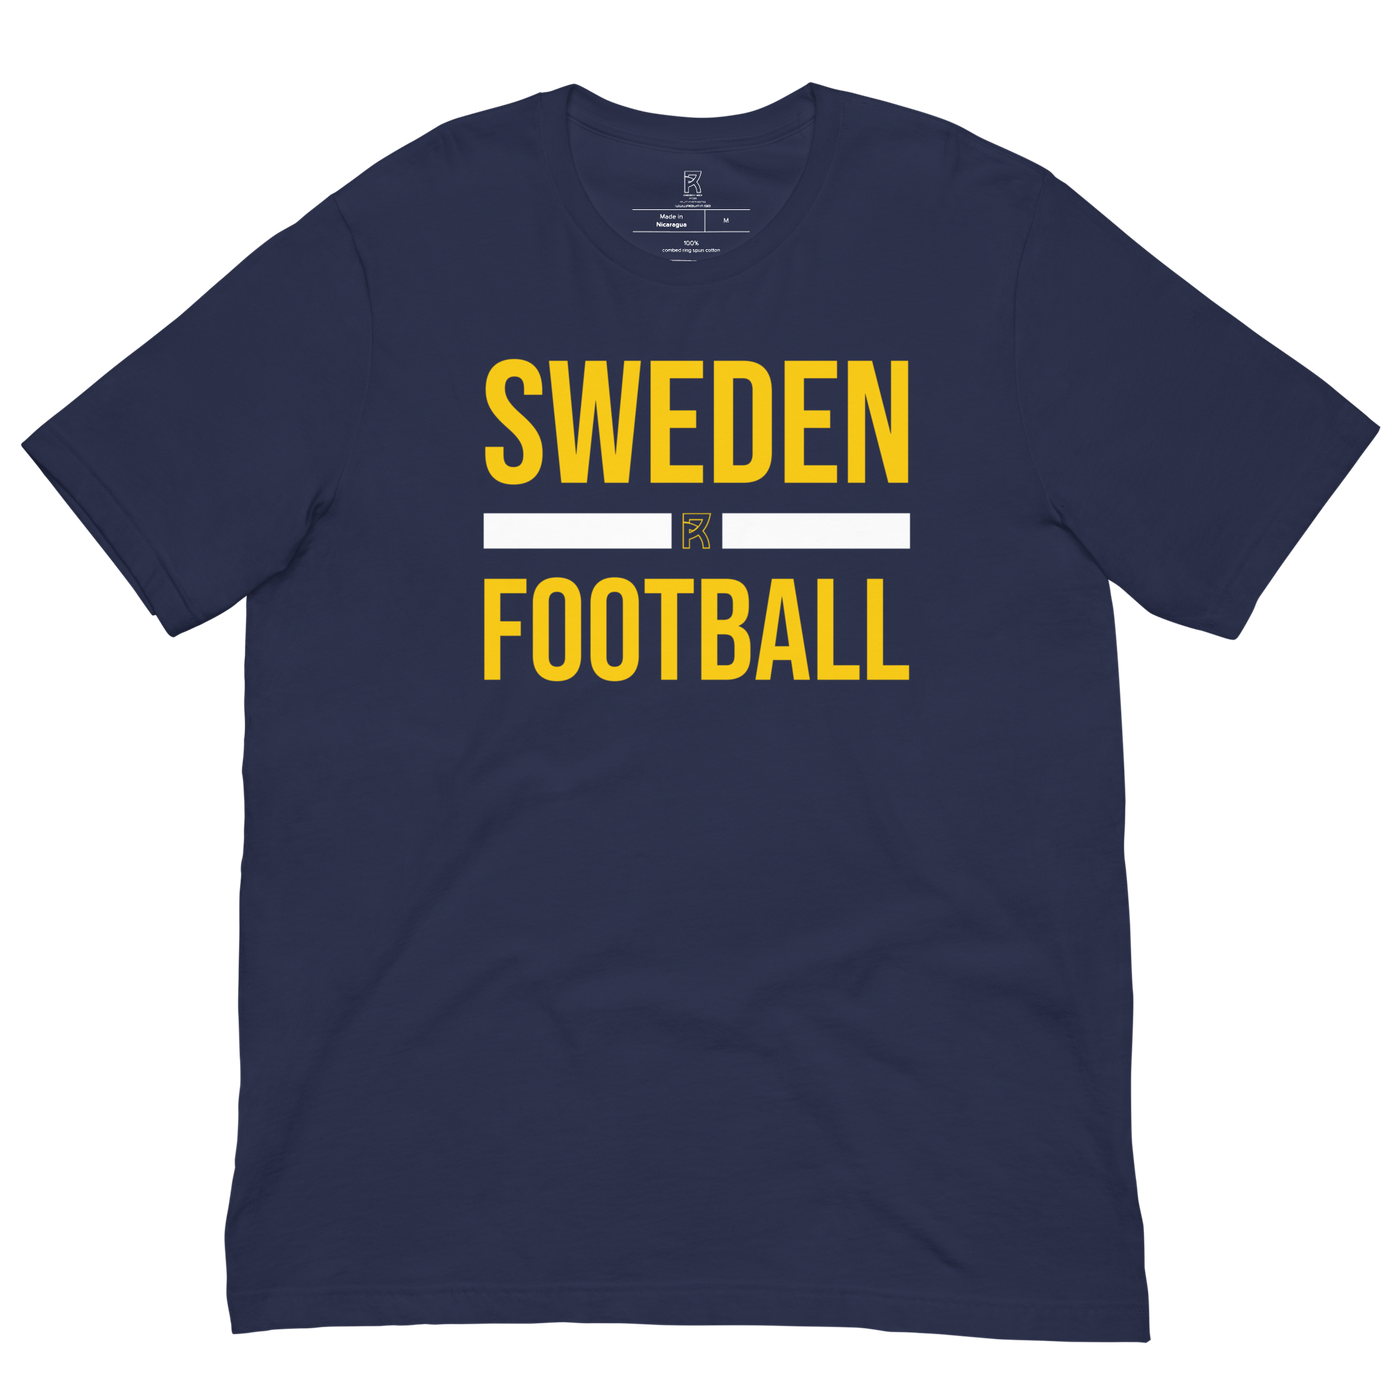 SWEDEN FOOTBALL NAVY BLUE - Premium  from Reyrr Athletics - Shop now at Reyrr Athletics